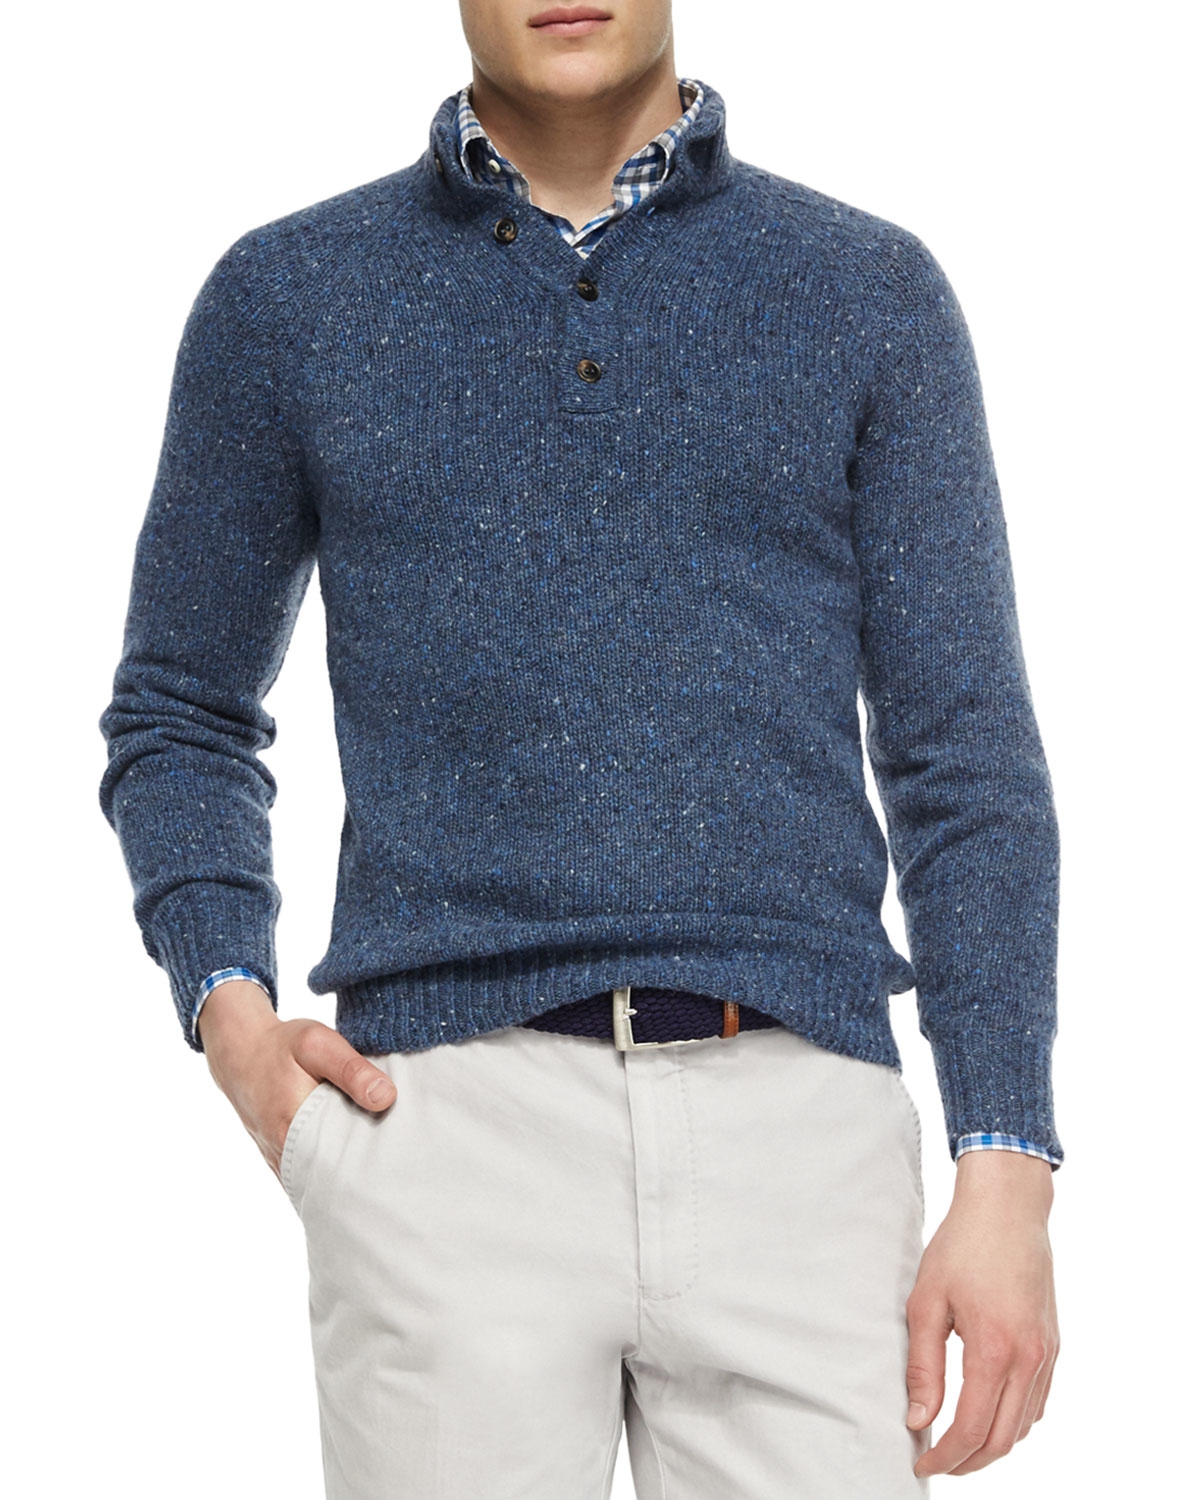 Lyst - Peter Millar Donegal Wool Henley Sweater in Blue for Men